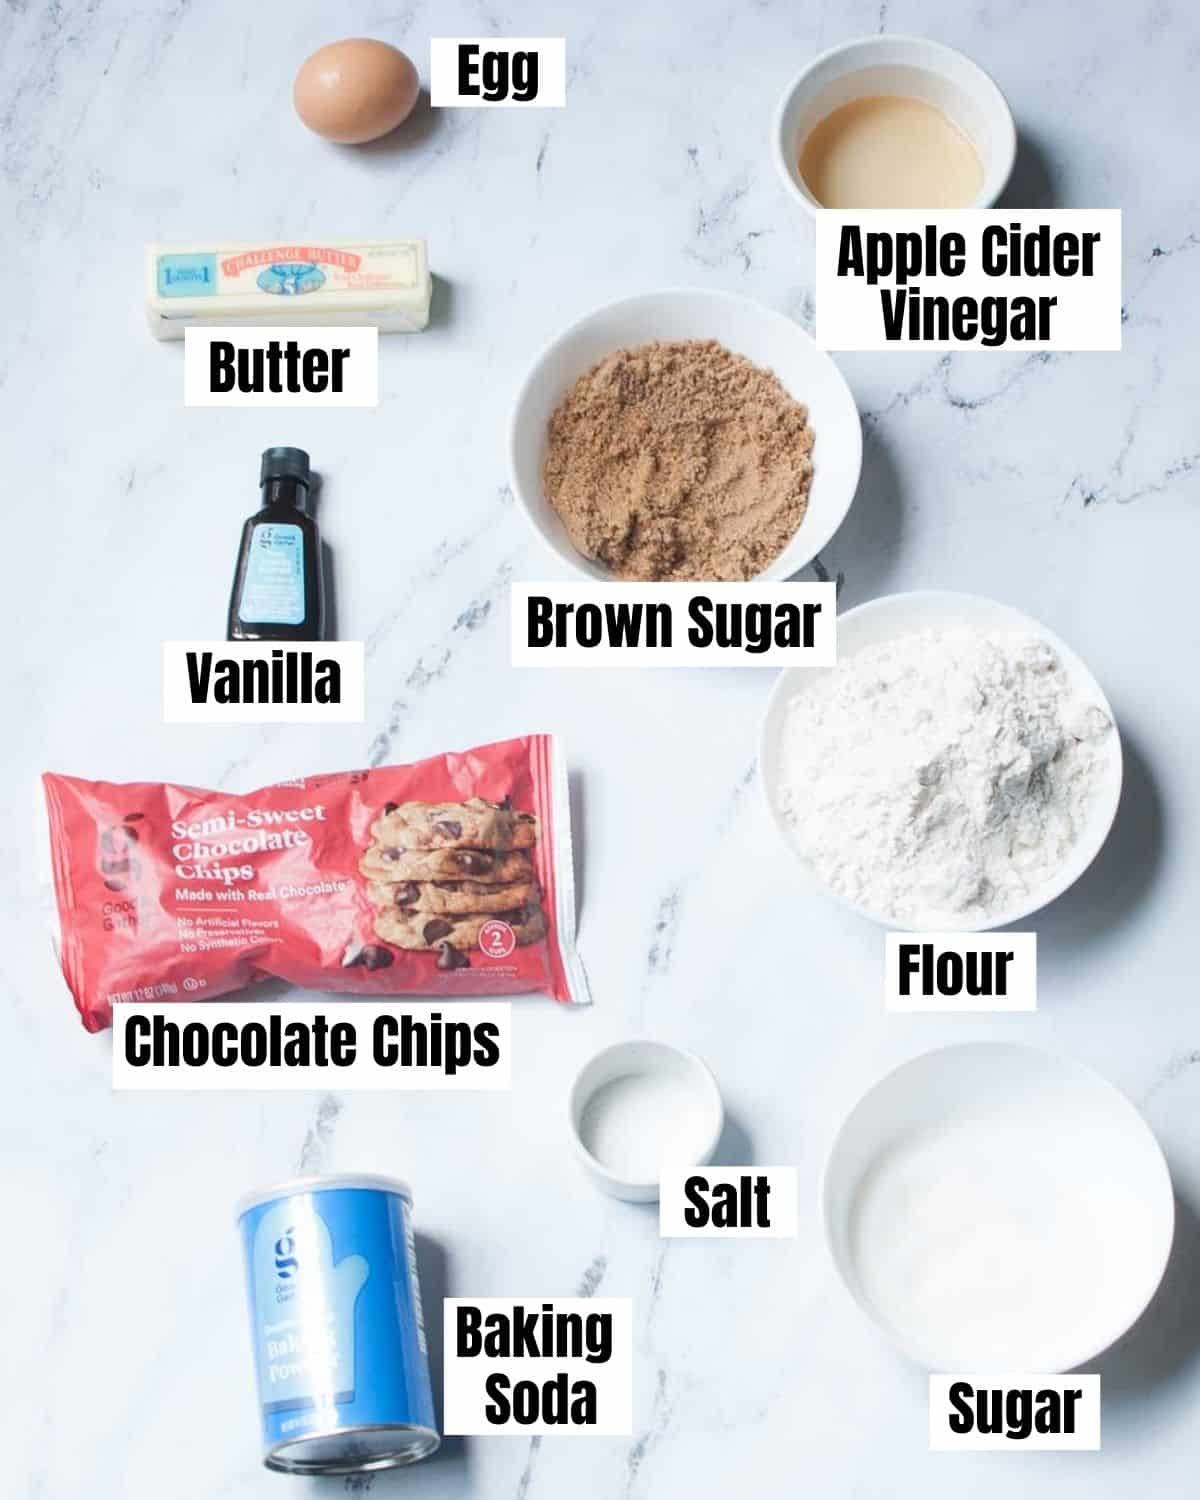 ingredients needed to make chocolate chip cookies with apple cider vinegar